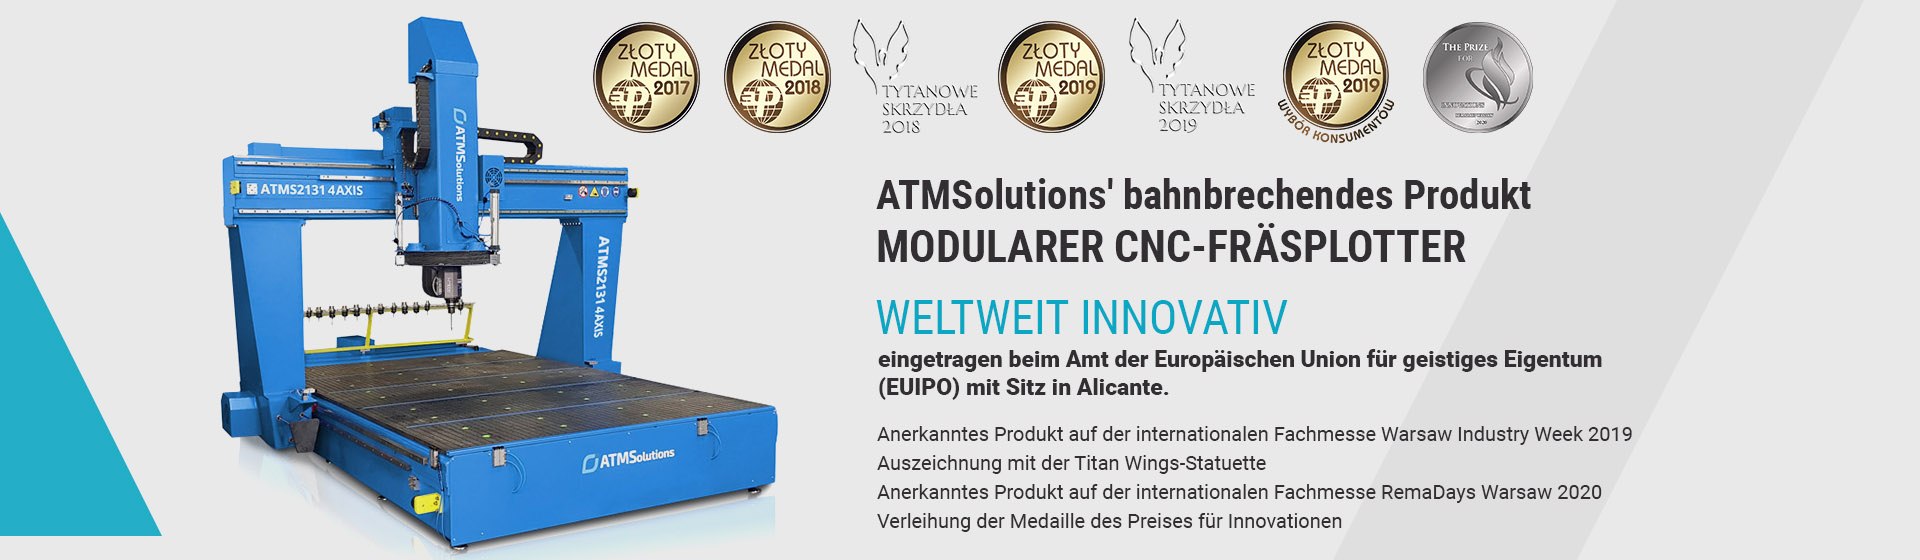 ATMSolutions' bahnbrechendes Produkt MODULARER CNC-FRÄSPLOTTER